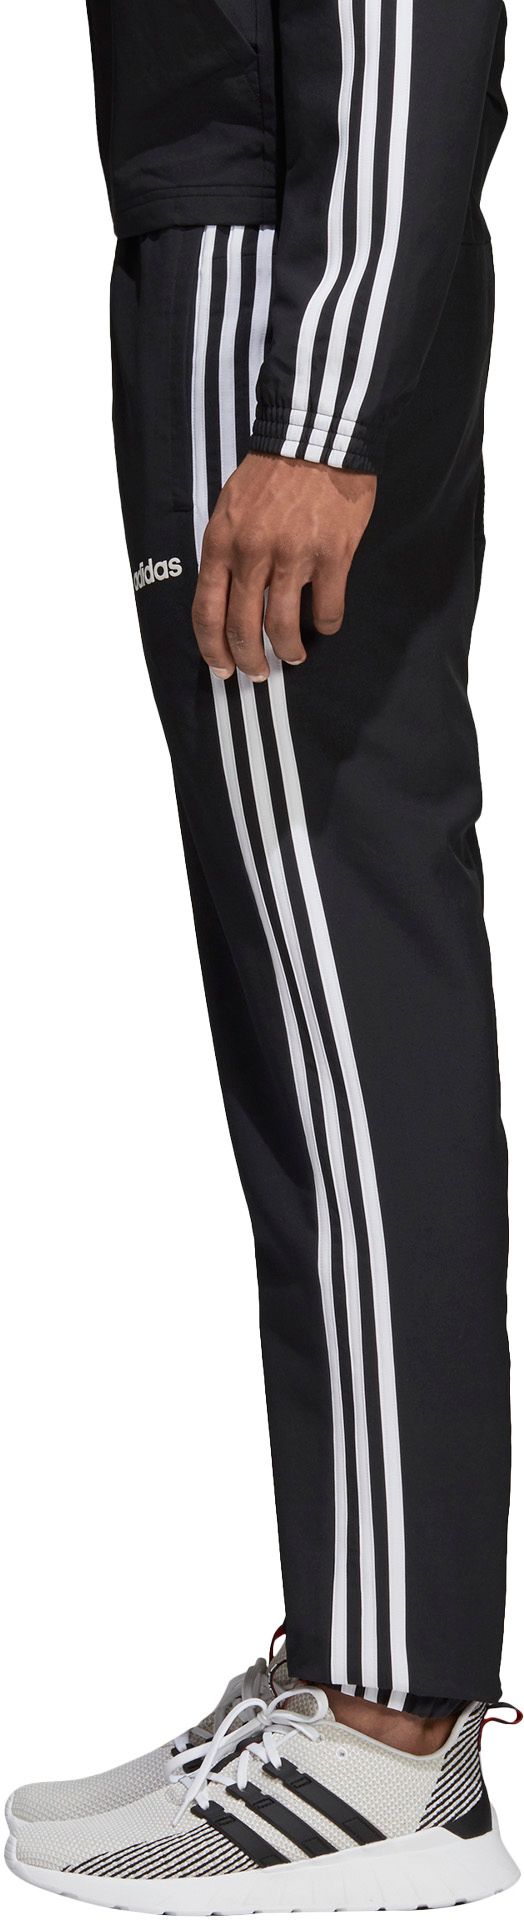 adidas women's 3 stripes wind pants